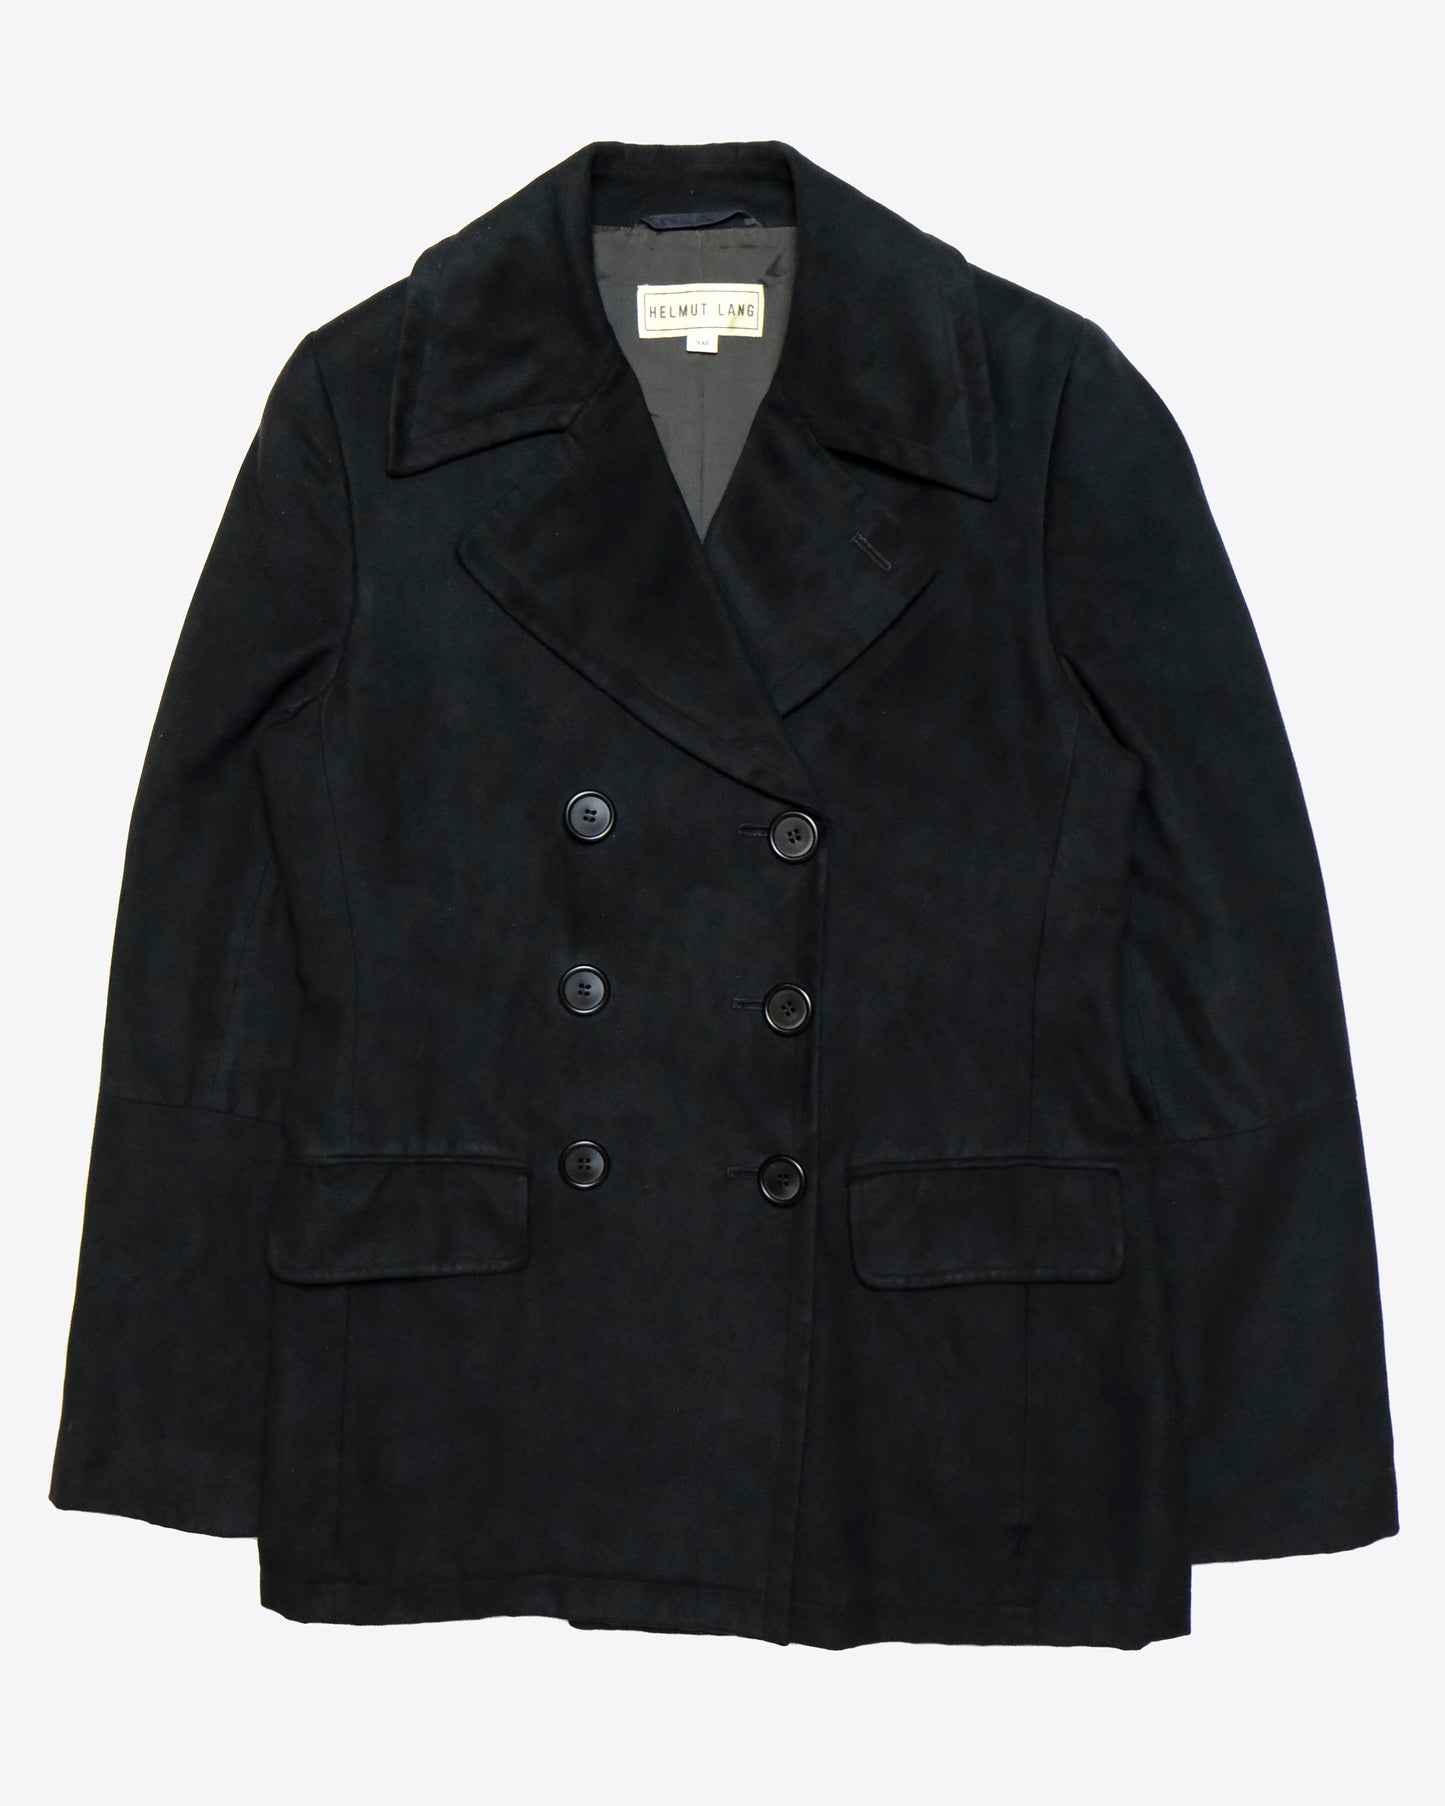 Helmut Lang - '90s 1/1 Sample Moleskin Pea Coat Blazer Jacket 